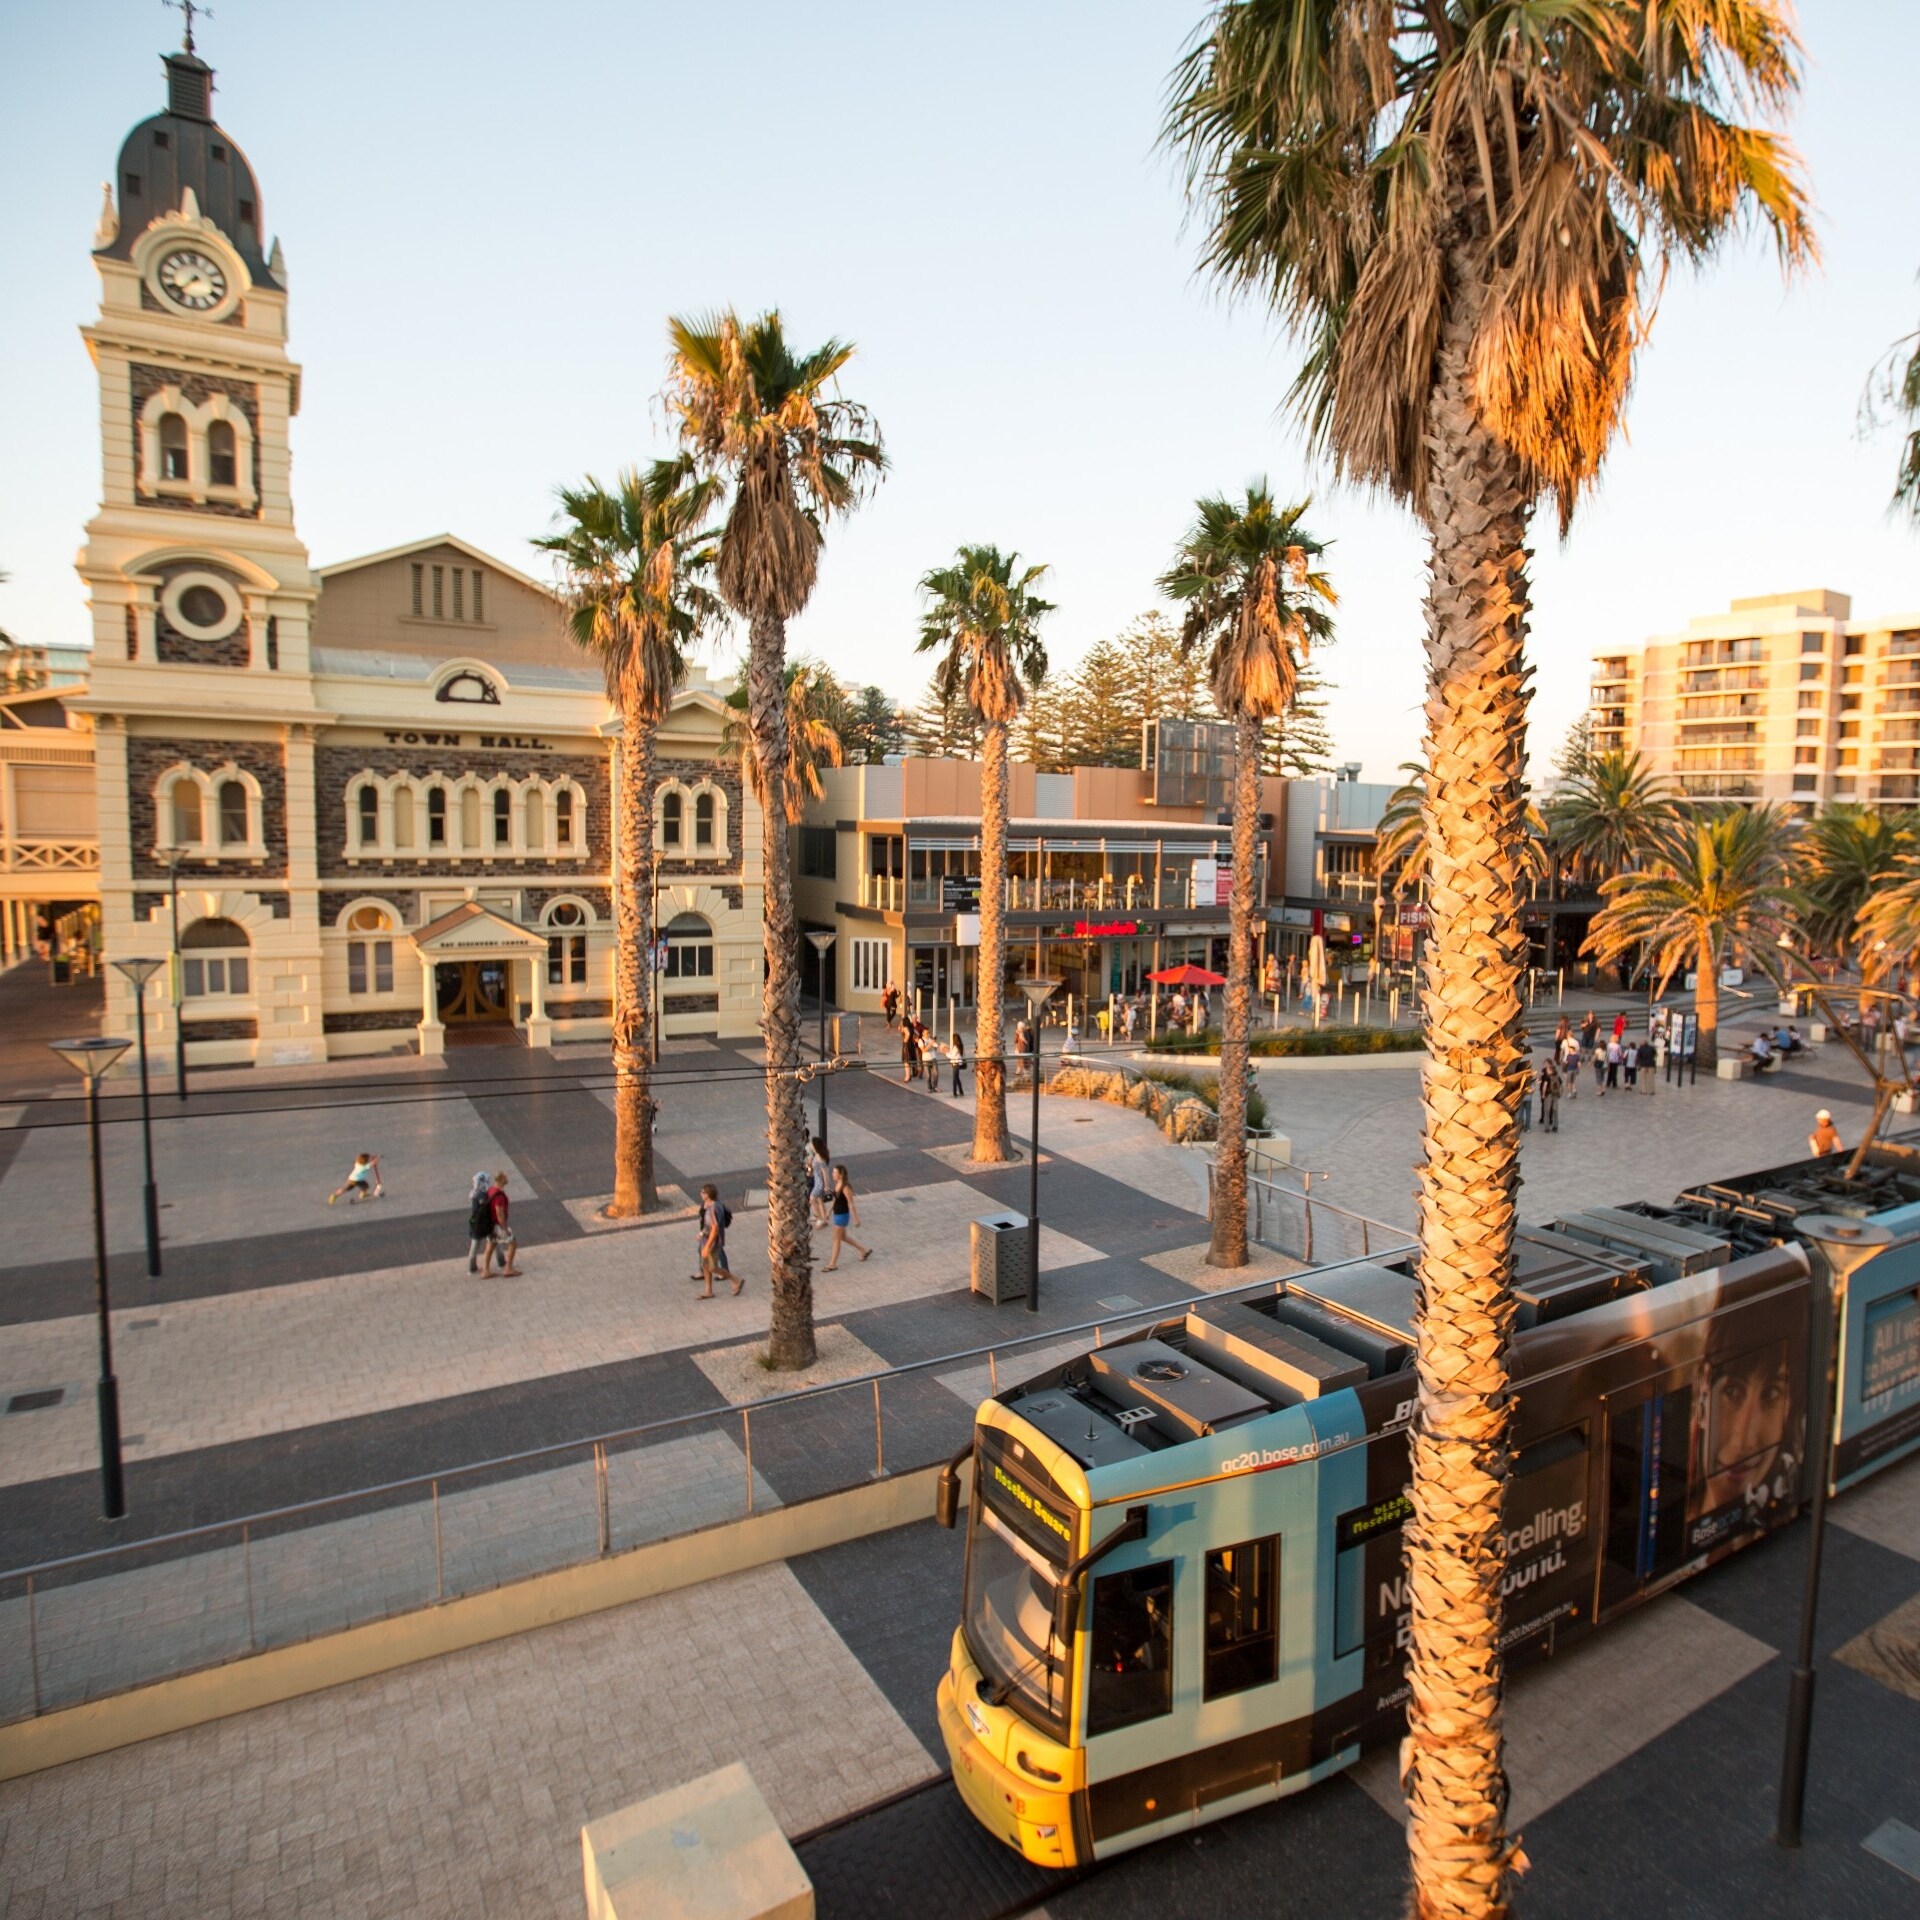 Tram, Moseley Square, Adelaide, South Australia © Tourism Australia